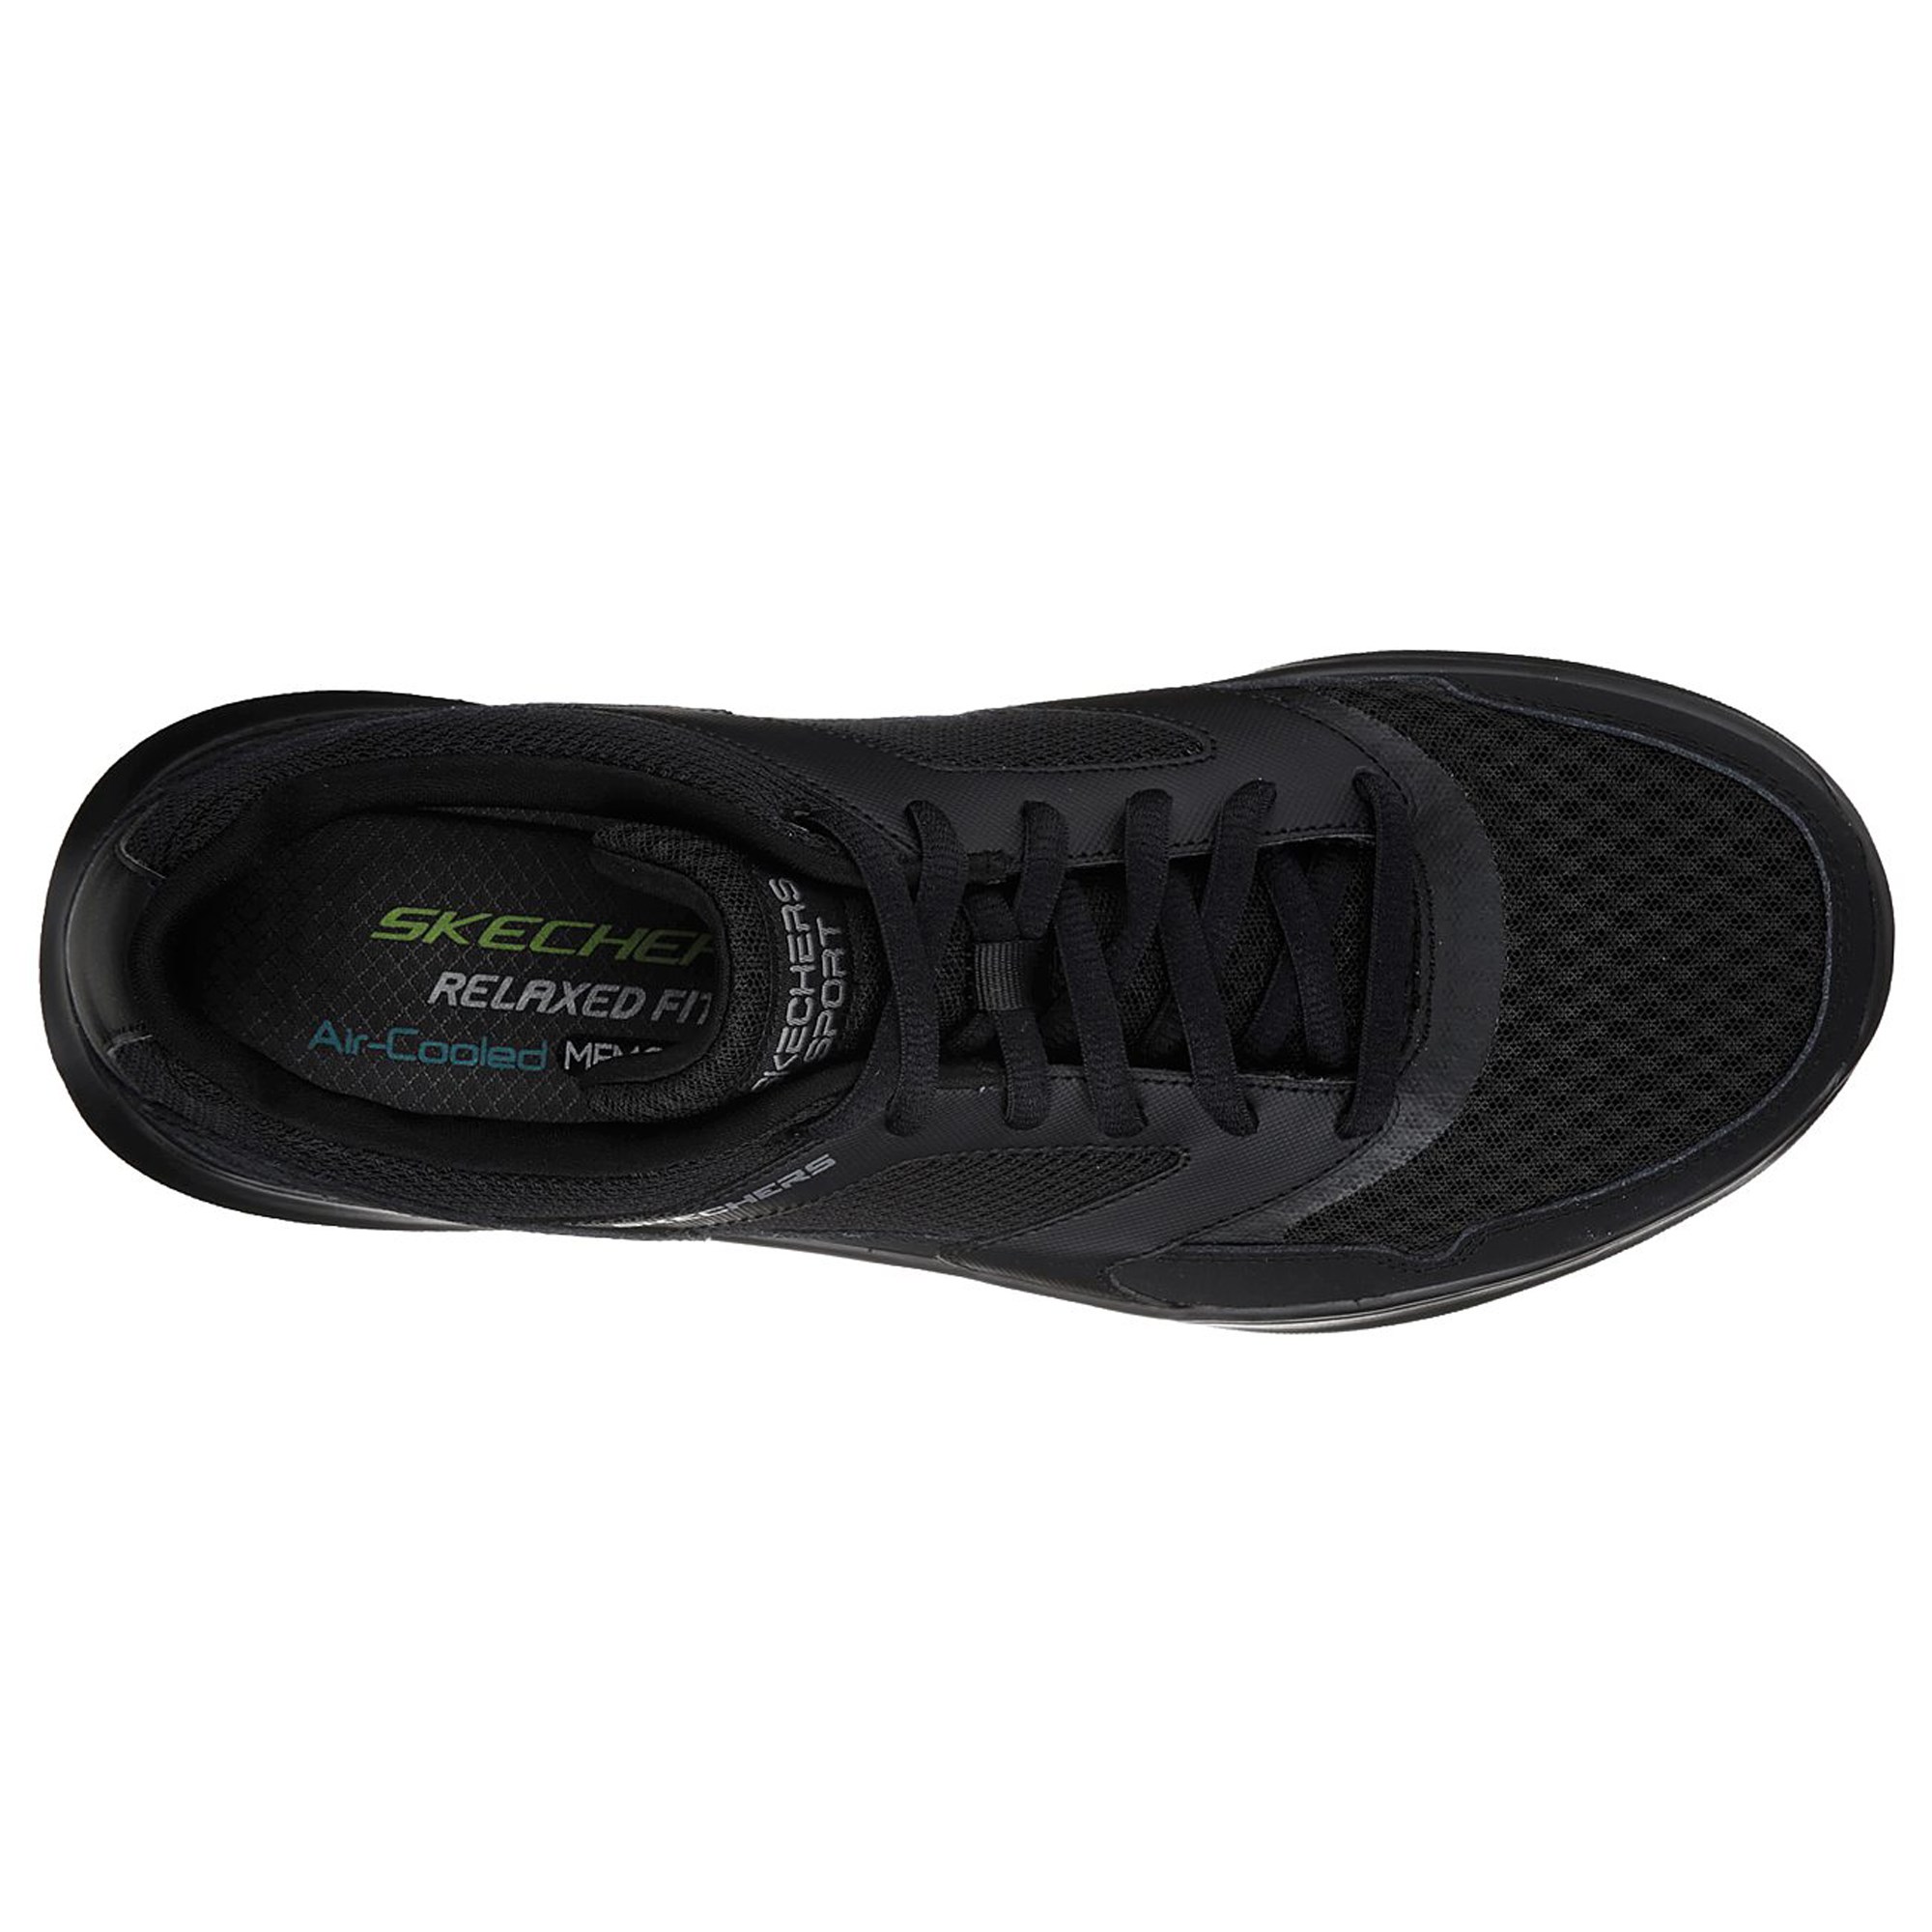 Skechers Relaxed Fit: Quantum Flex - Hudzick Erkek Spor Ayakkabı Ürün kodu:  052385-001 | Etichet Sport